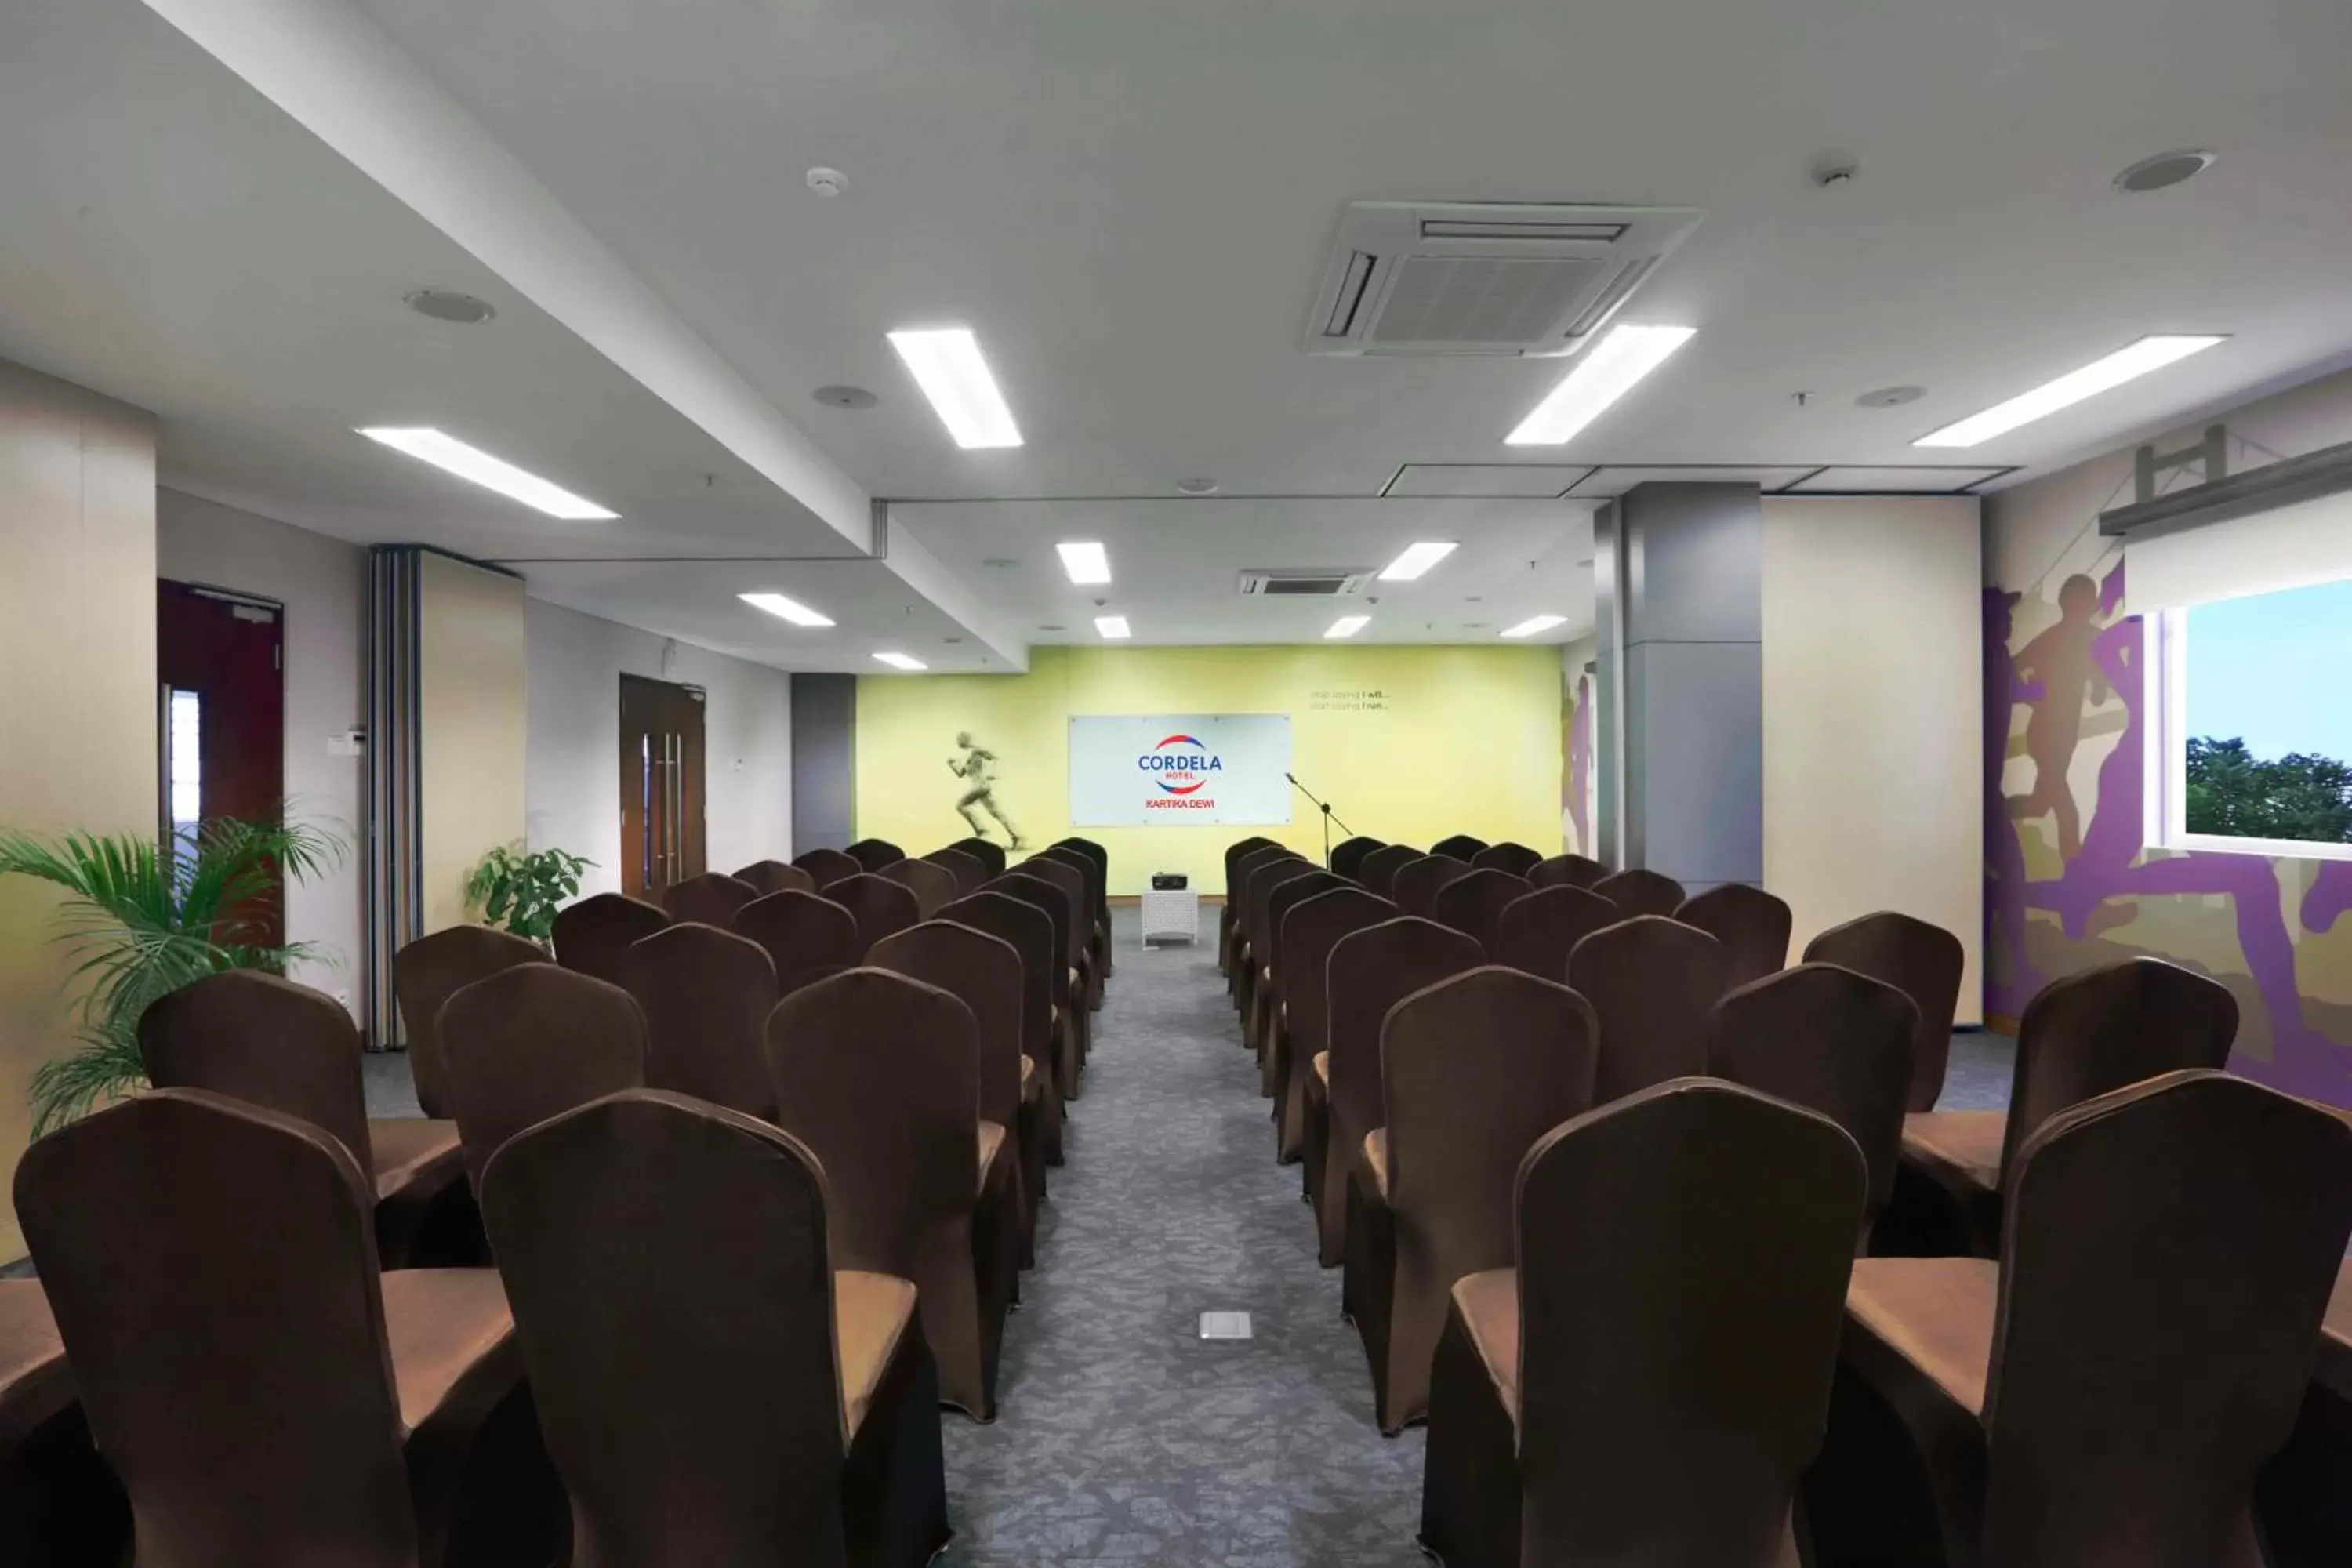 Banquet/Function facilities, Business Area/Conference Room in Cordela Kartika Dewi Yogyakarta